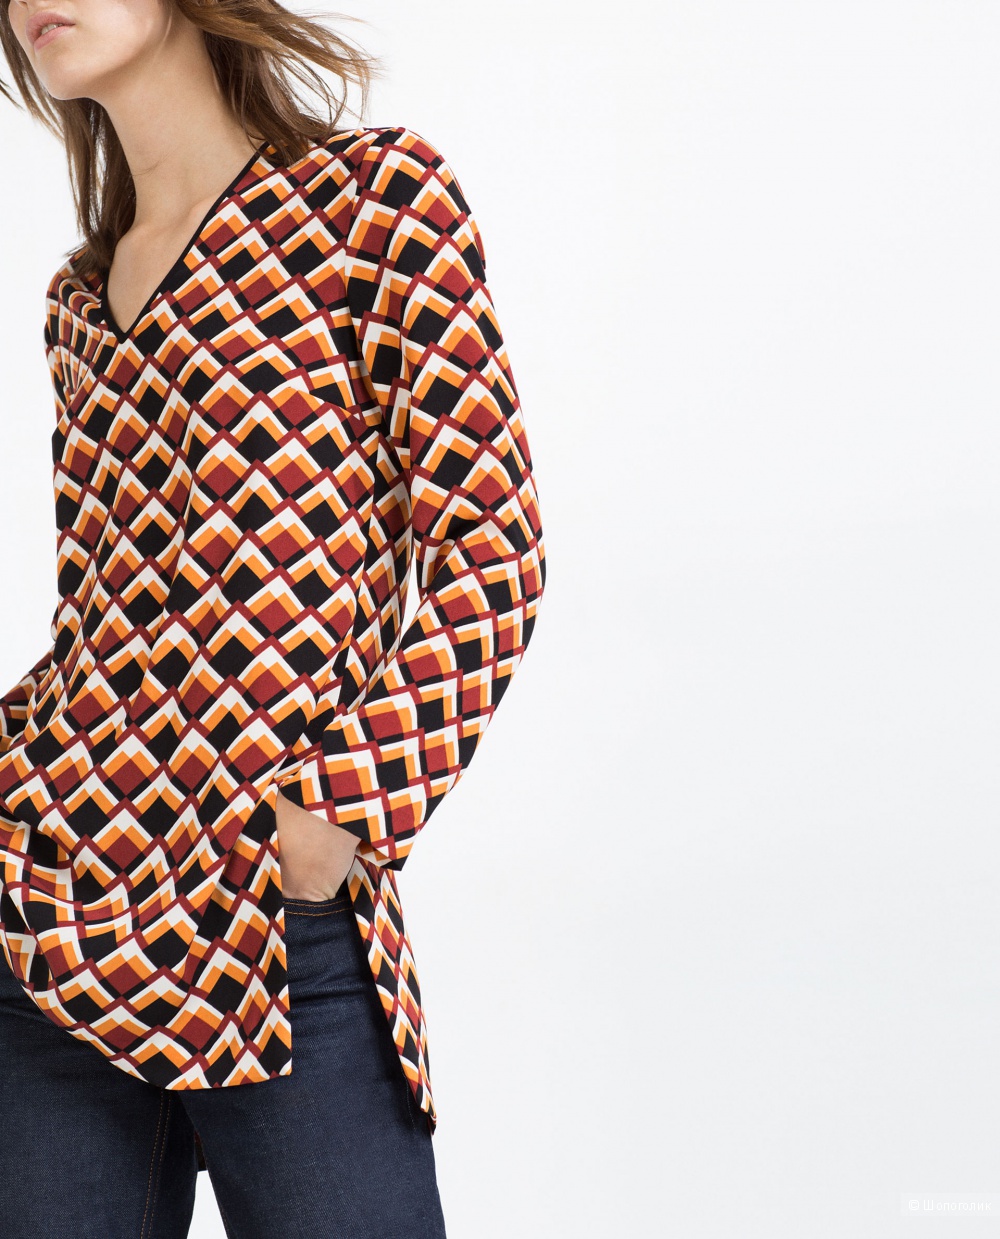 Zara women блузка туника размер S